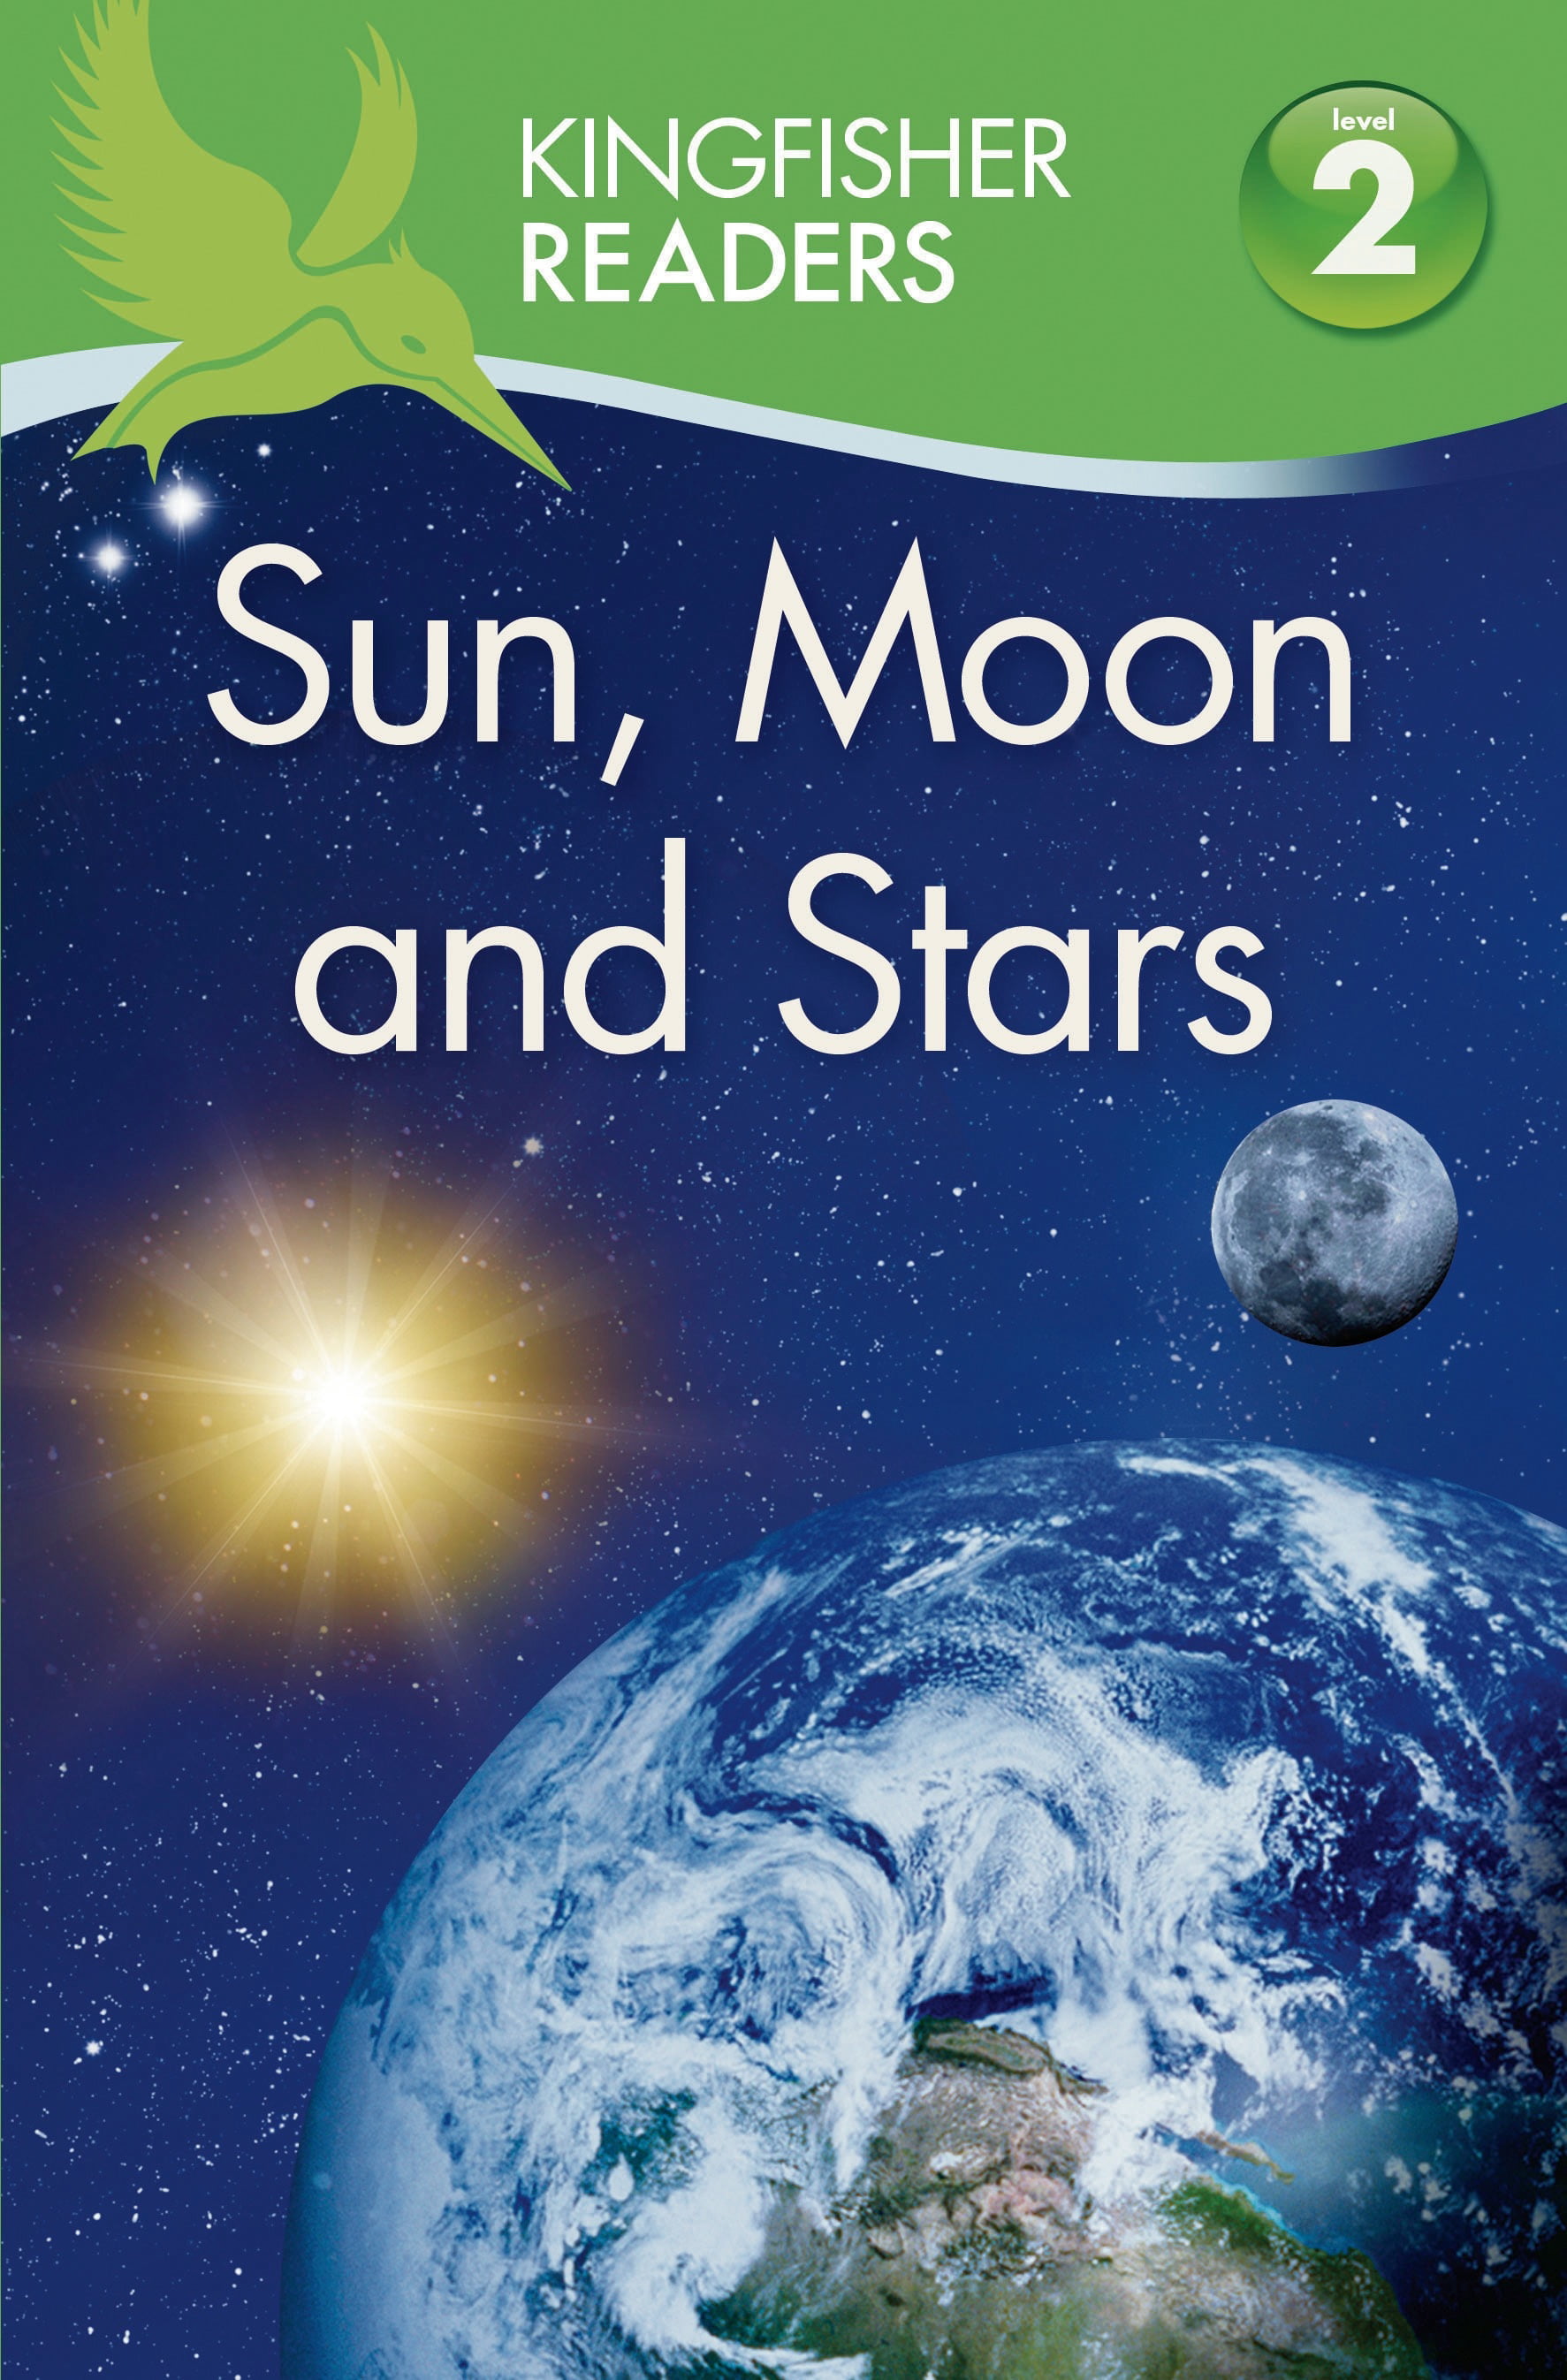 Moon Sun Kingfisher Readers L2 and Stars